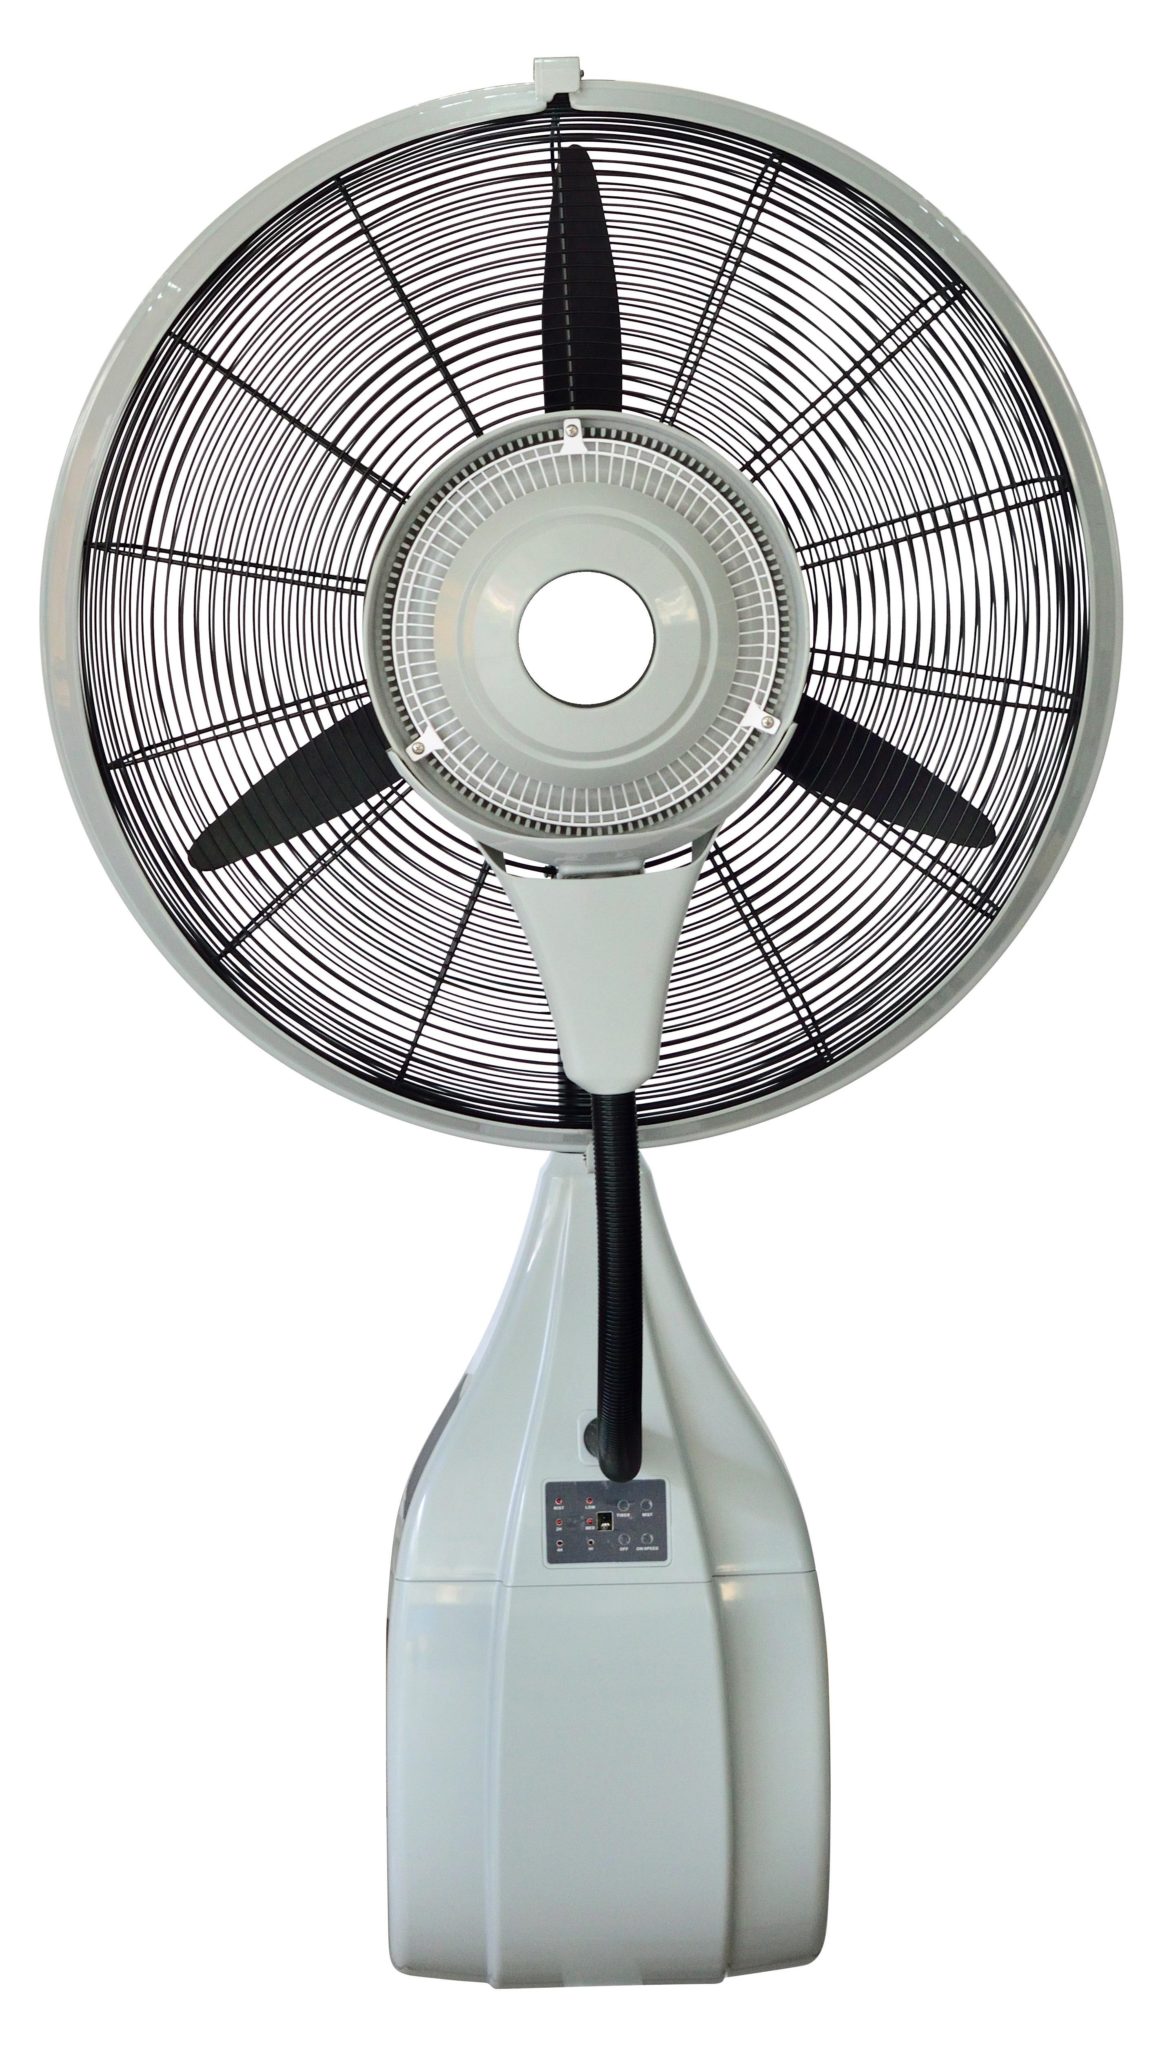 MISTING FAN WALL MOUNT 650MM / Industrial Heating Cooling Ventilation Distribution Fans Warehouse Australia / Fanmaster